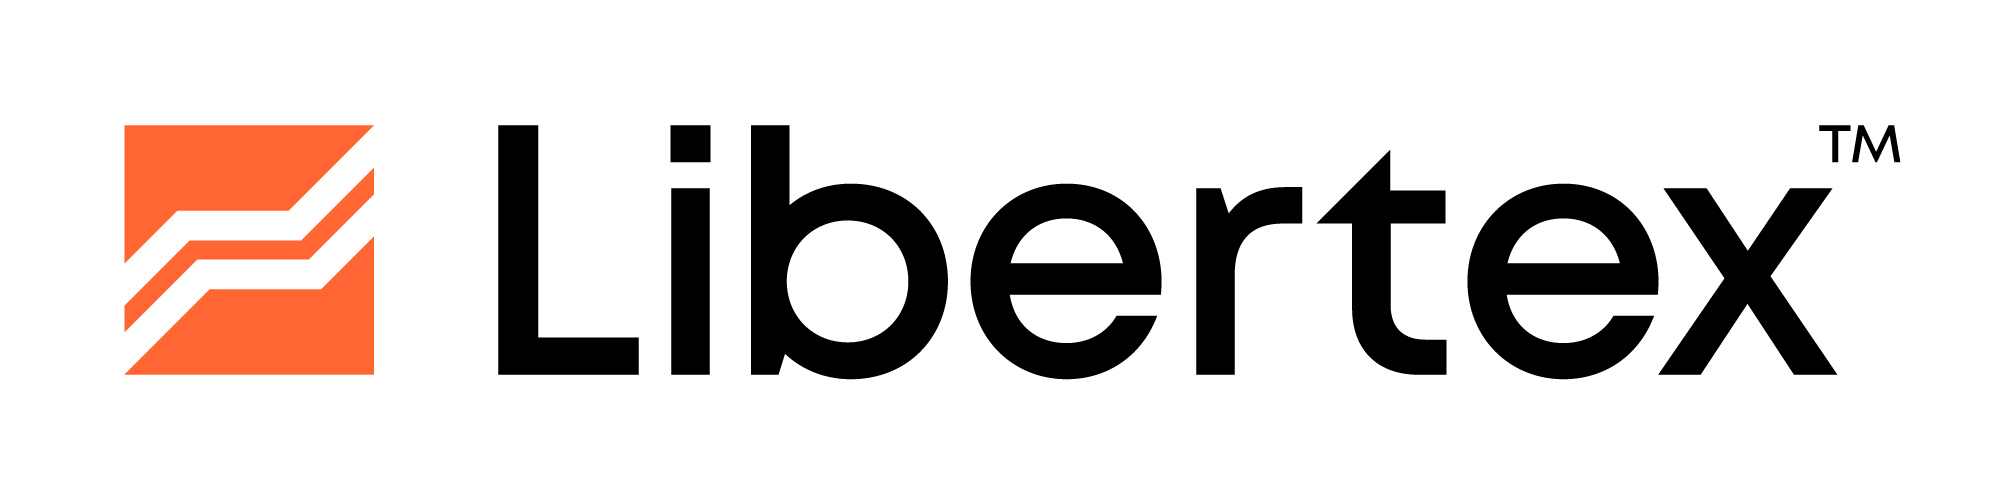 Libertex_Logo